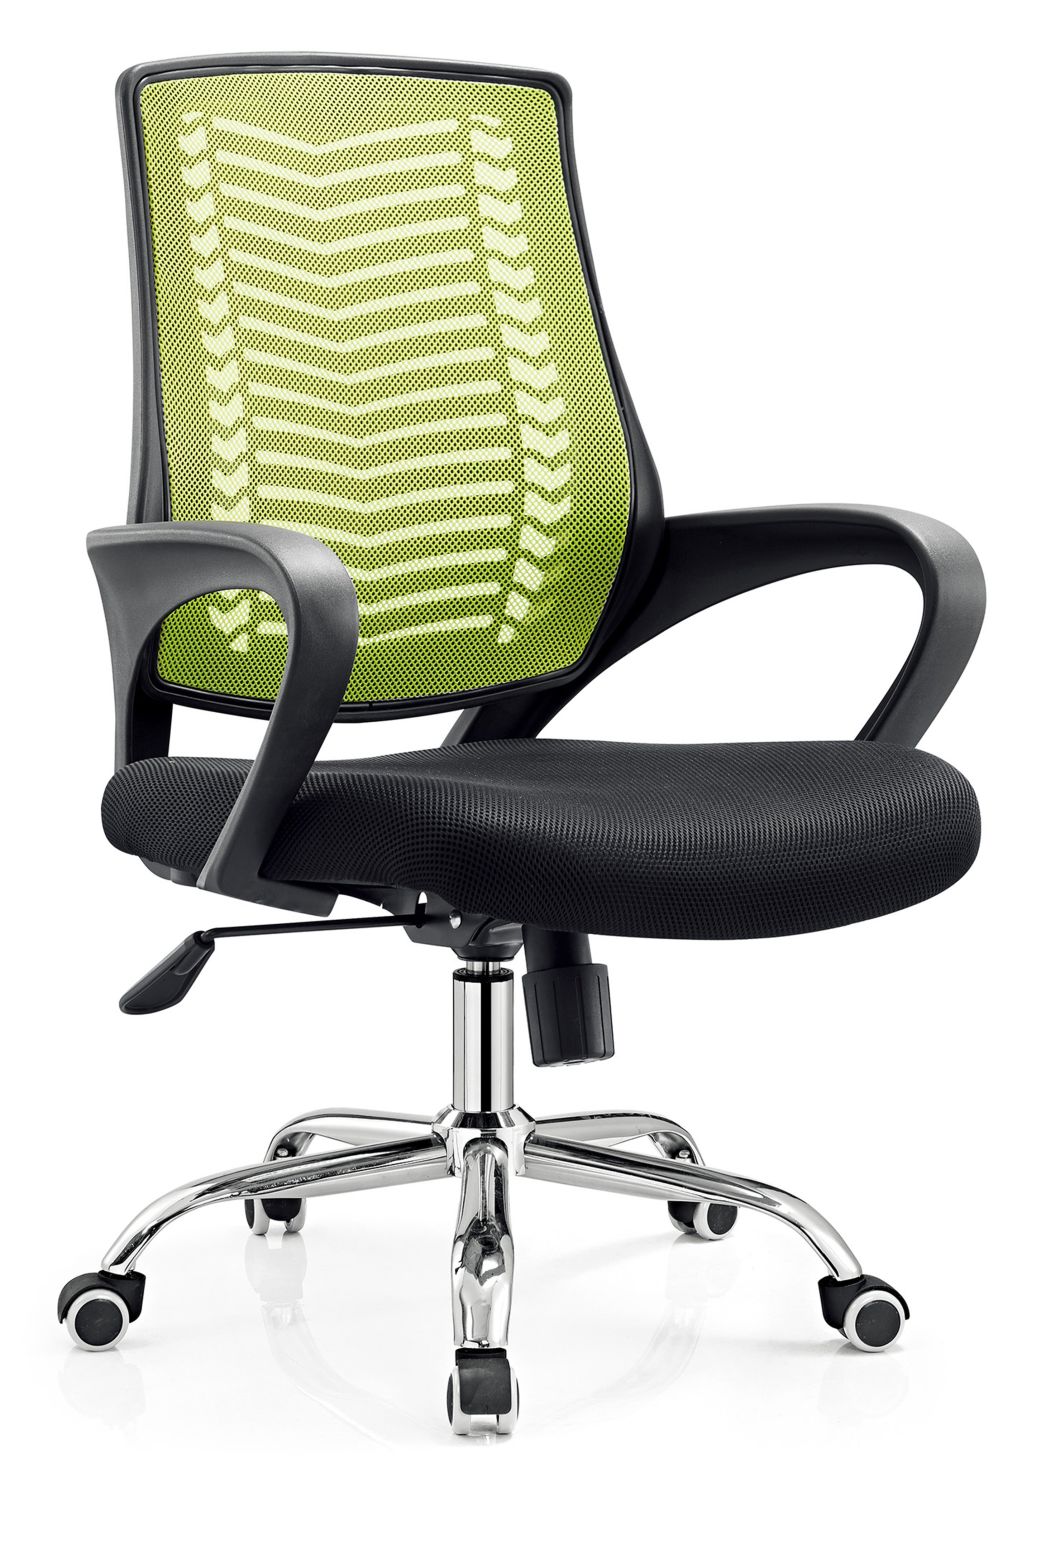 Mesh Office Swivel New Design Chair Modern Big Discount Cheap Price Office Furniture